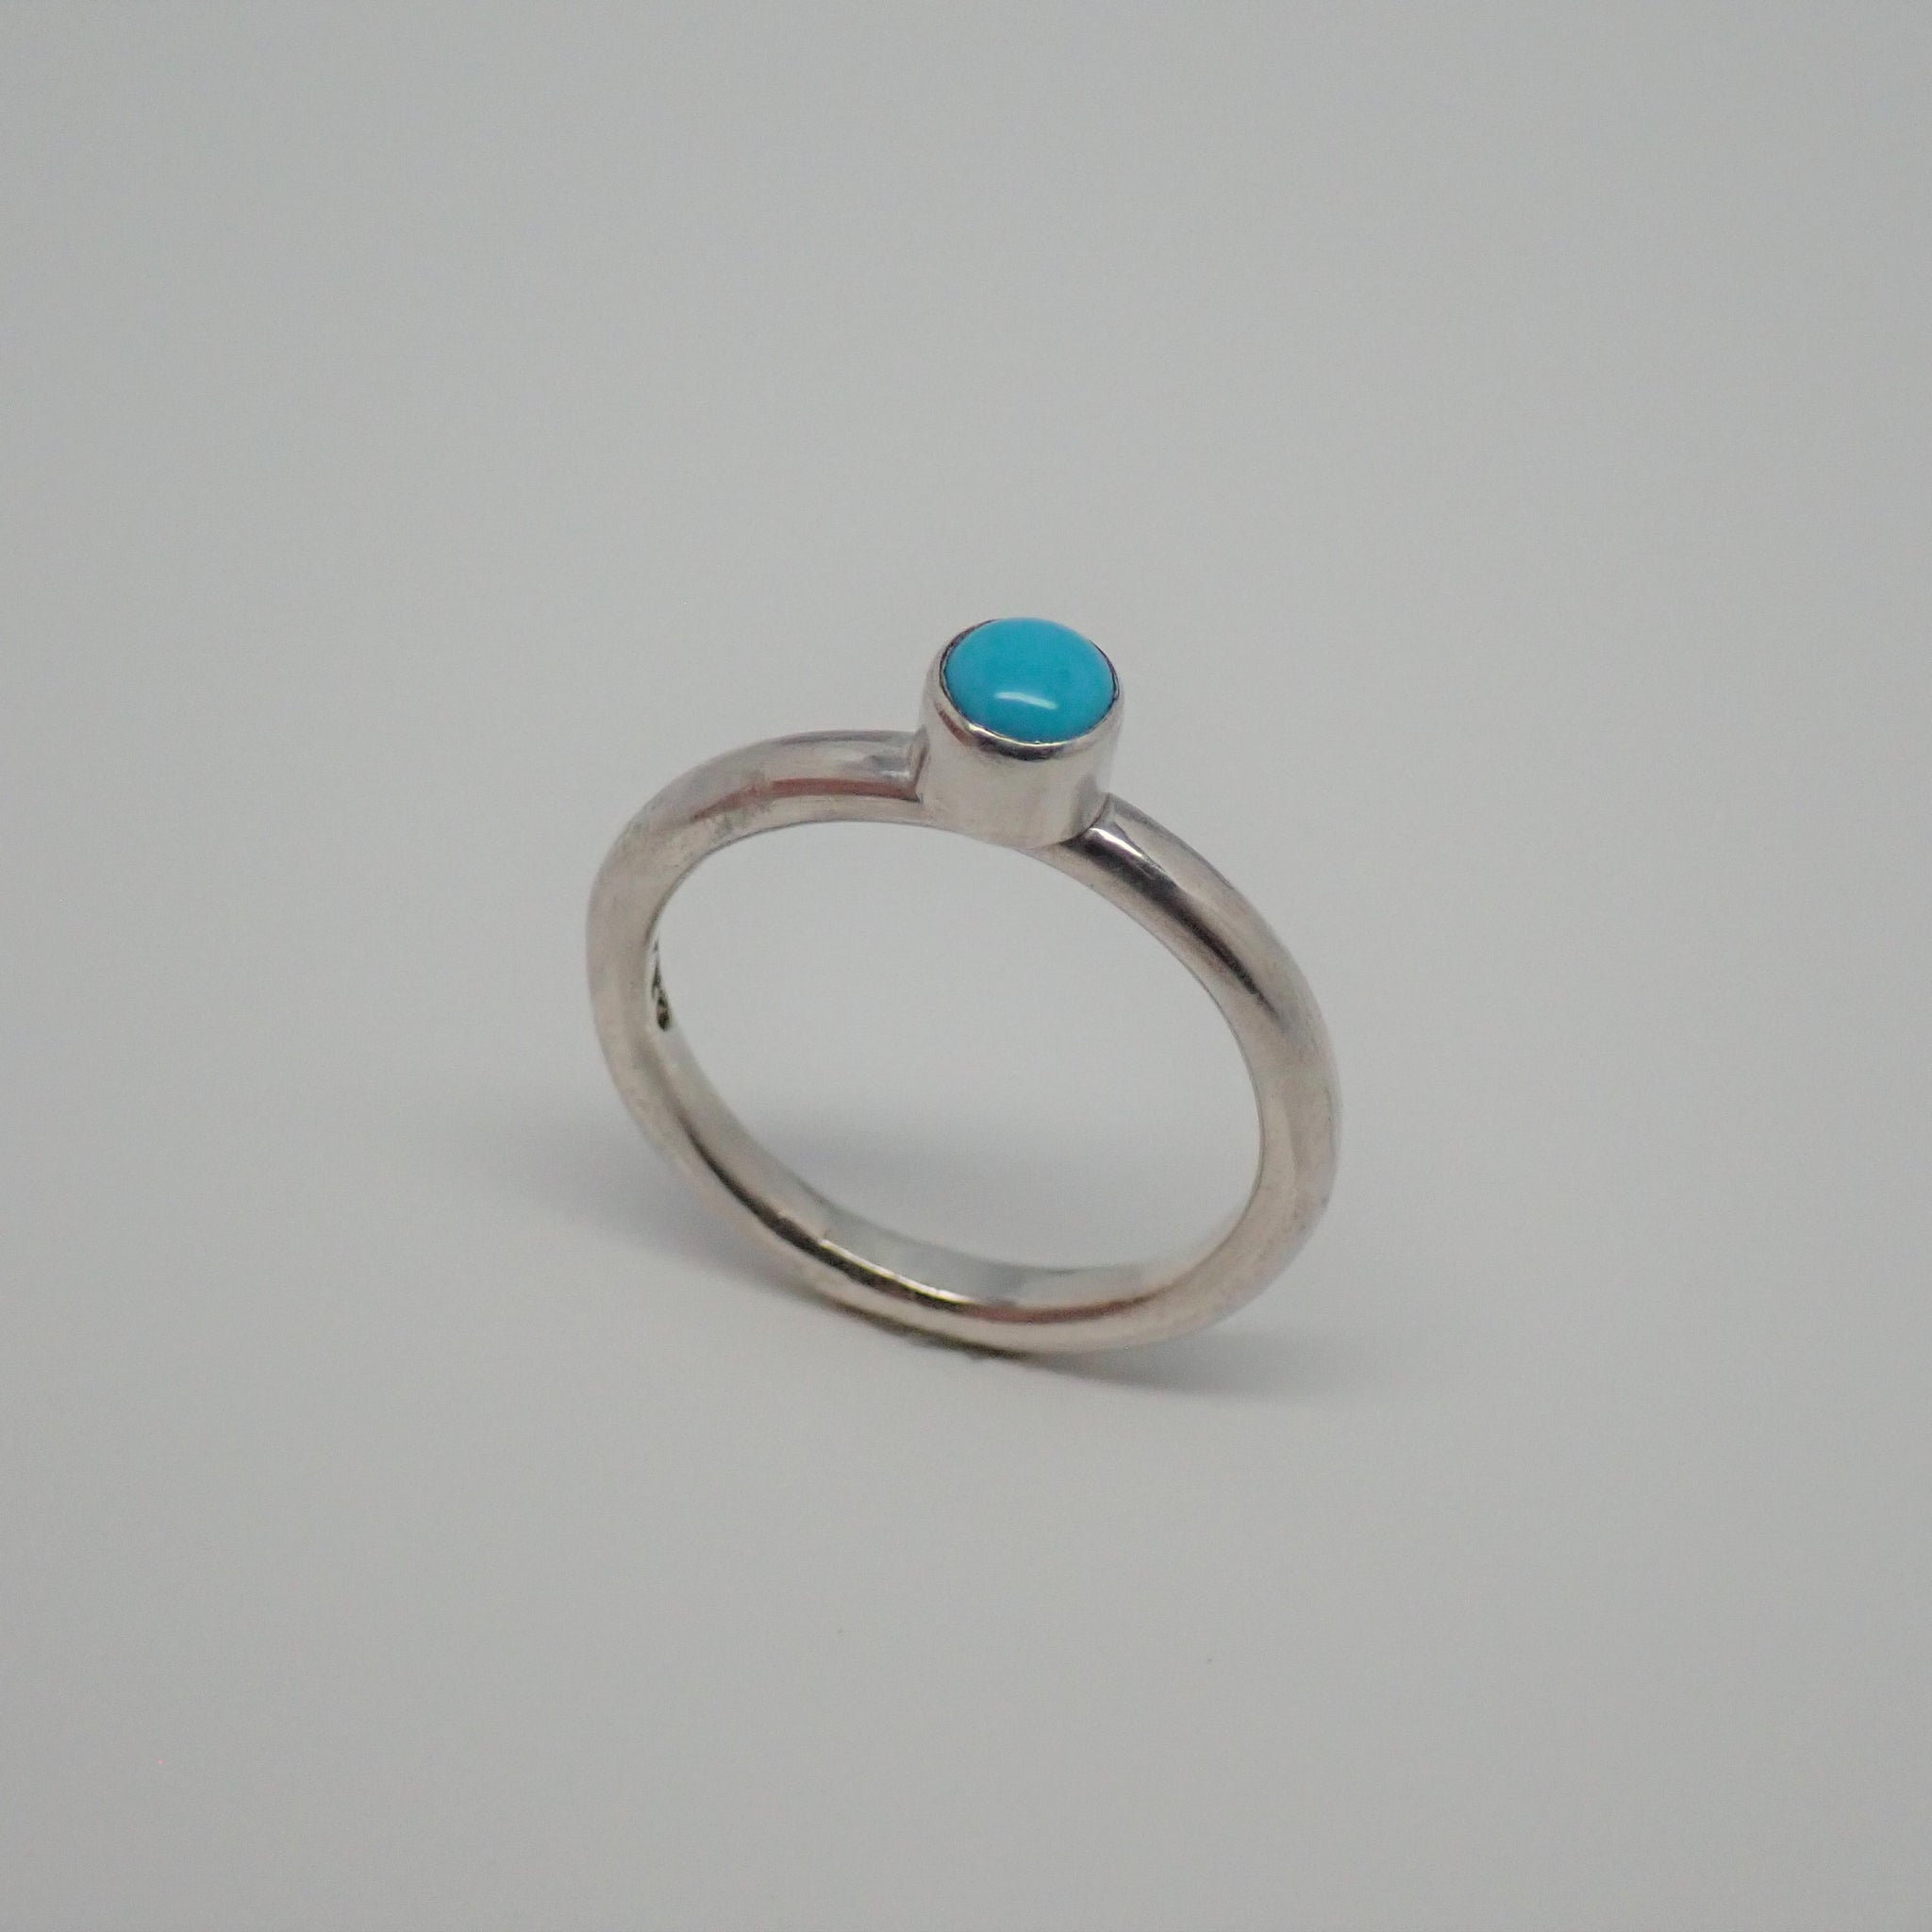 Sleeping Beauty Turquoise Ring (size 8.5)